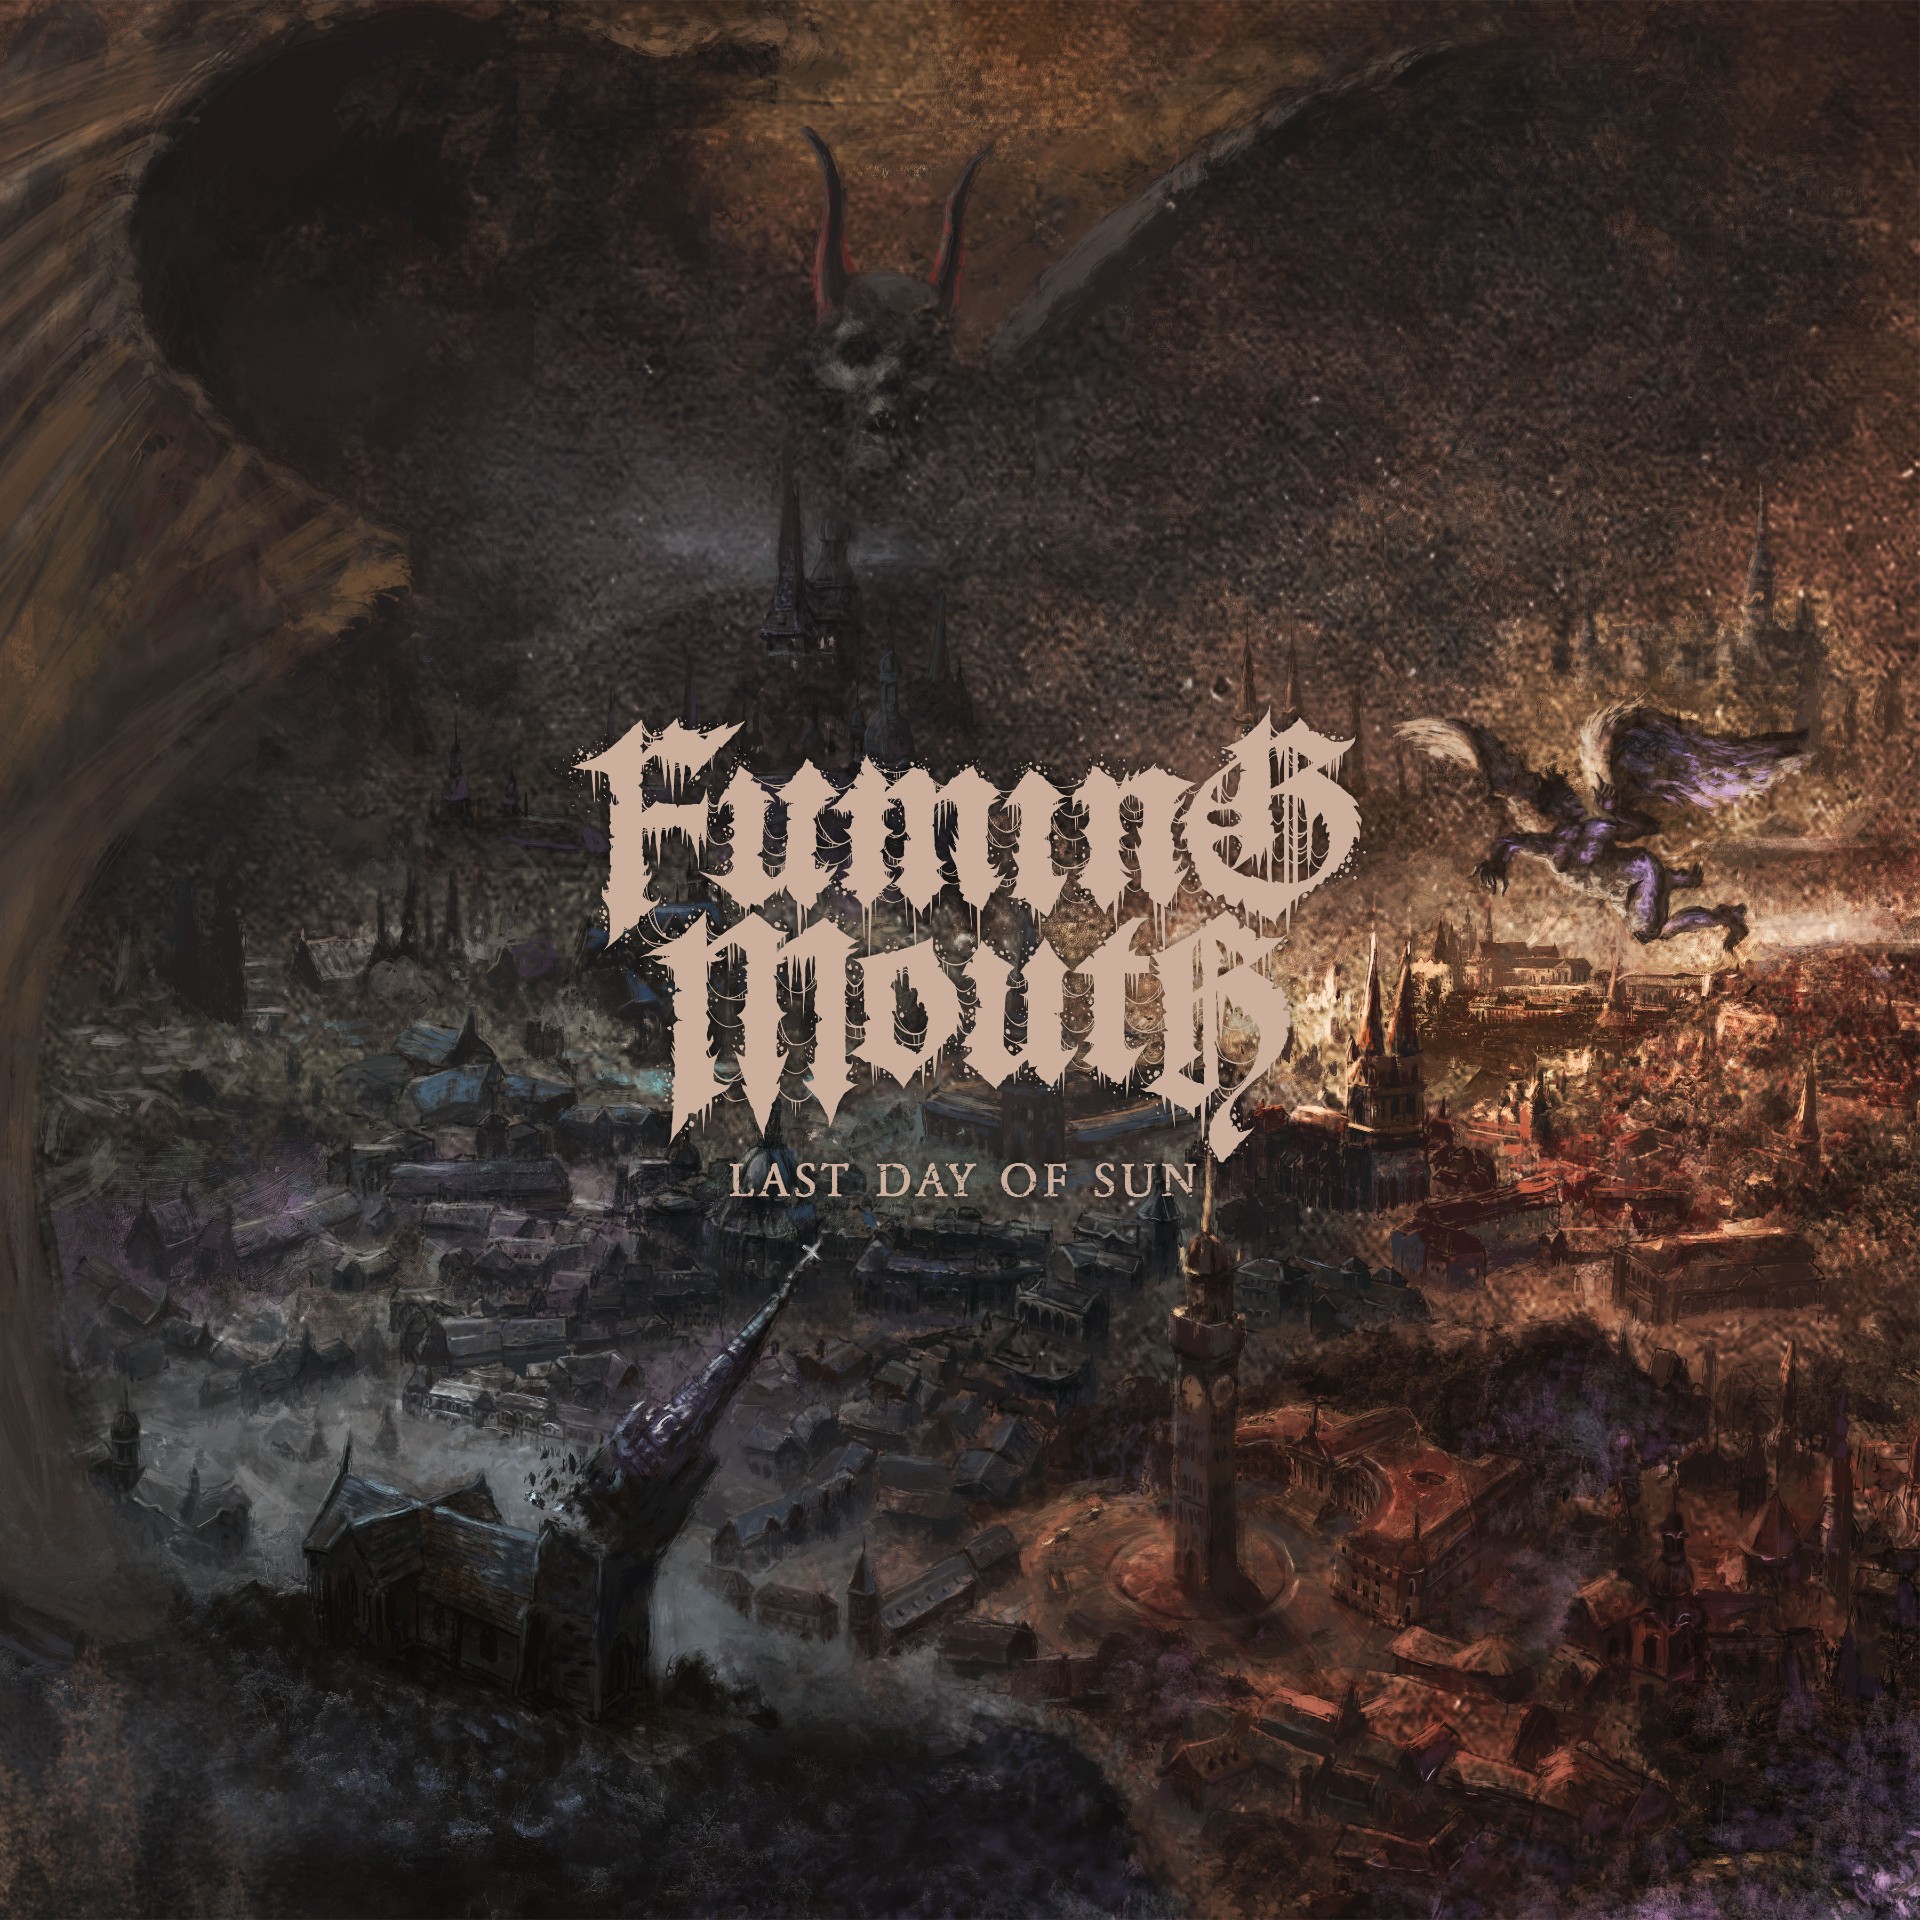 Fuming Mouth ‘Last Day of Sun’ album artwork